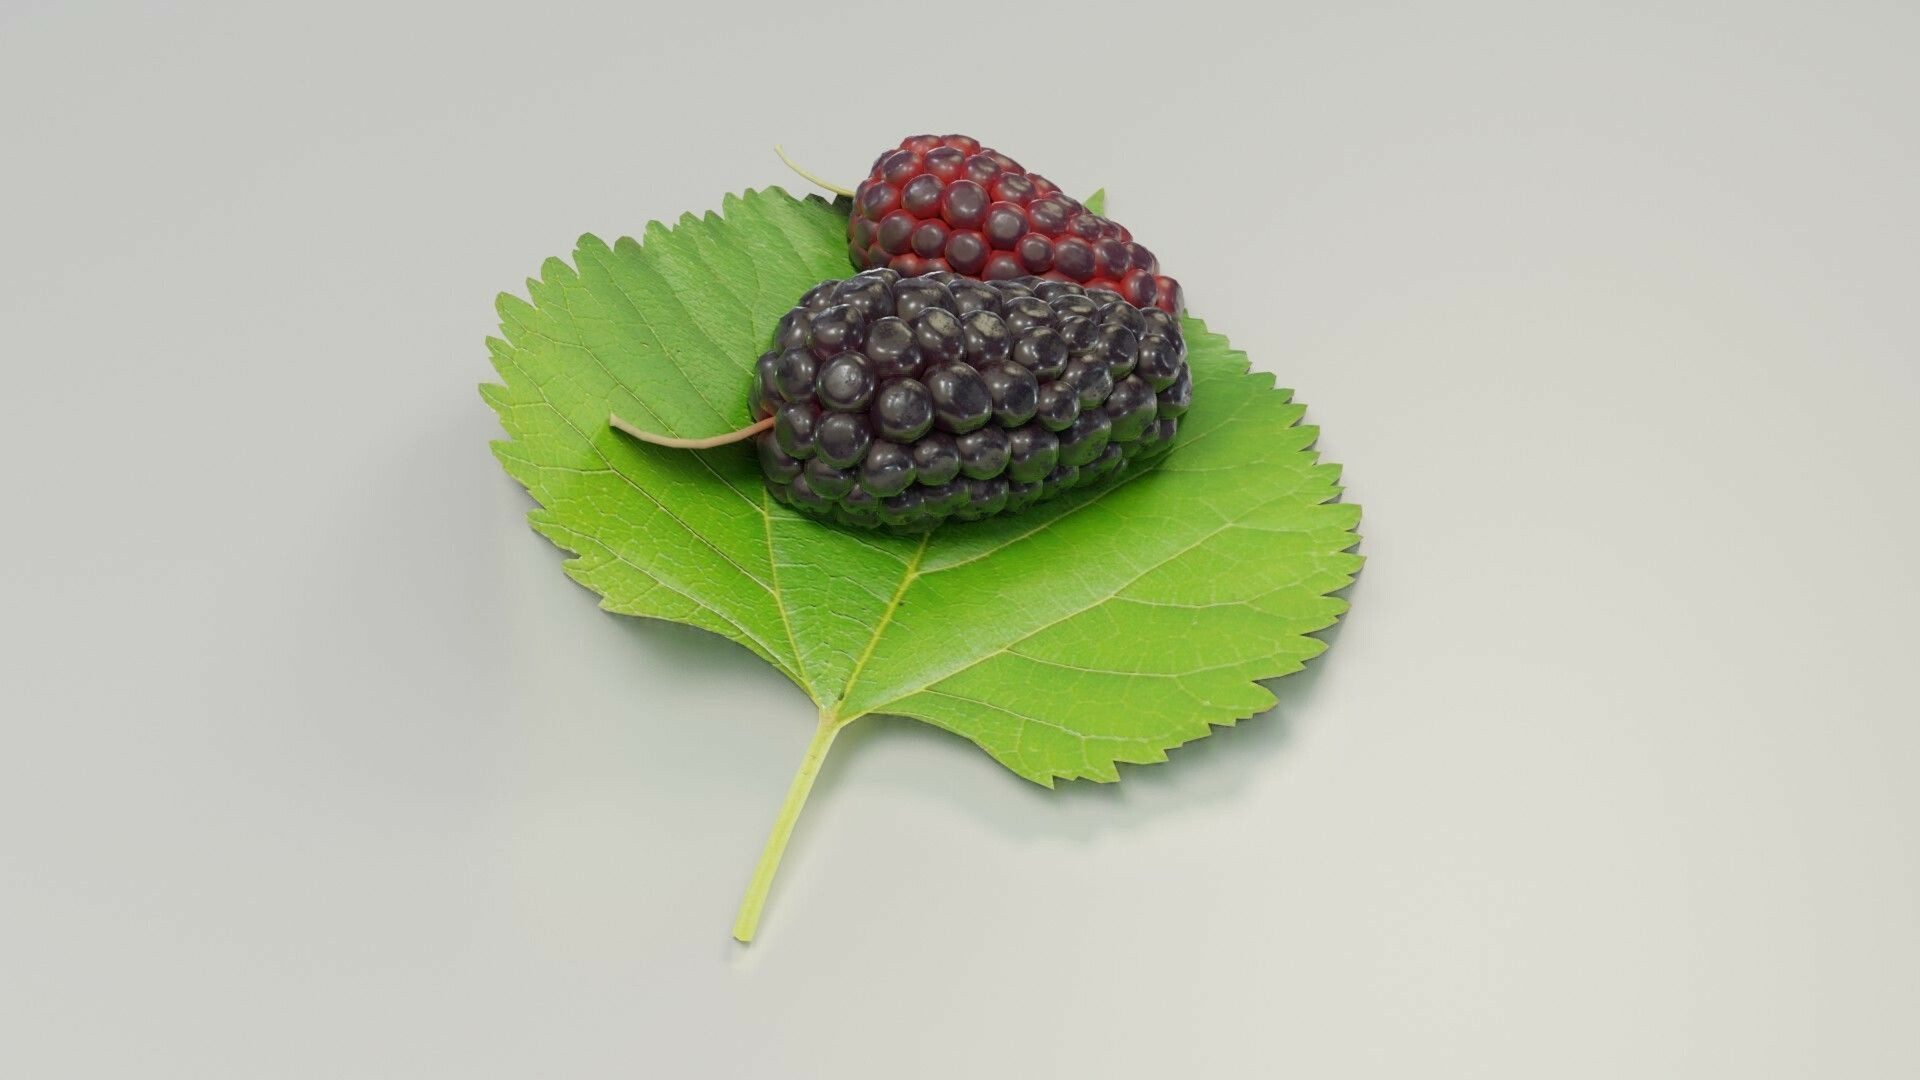 Disco mulberry model, 3D food, Vibrant colors, Unique texture, 1920x1080 Full HD Desktop